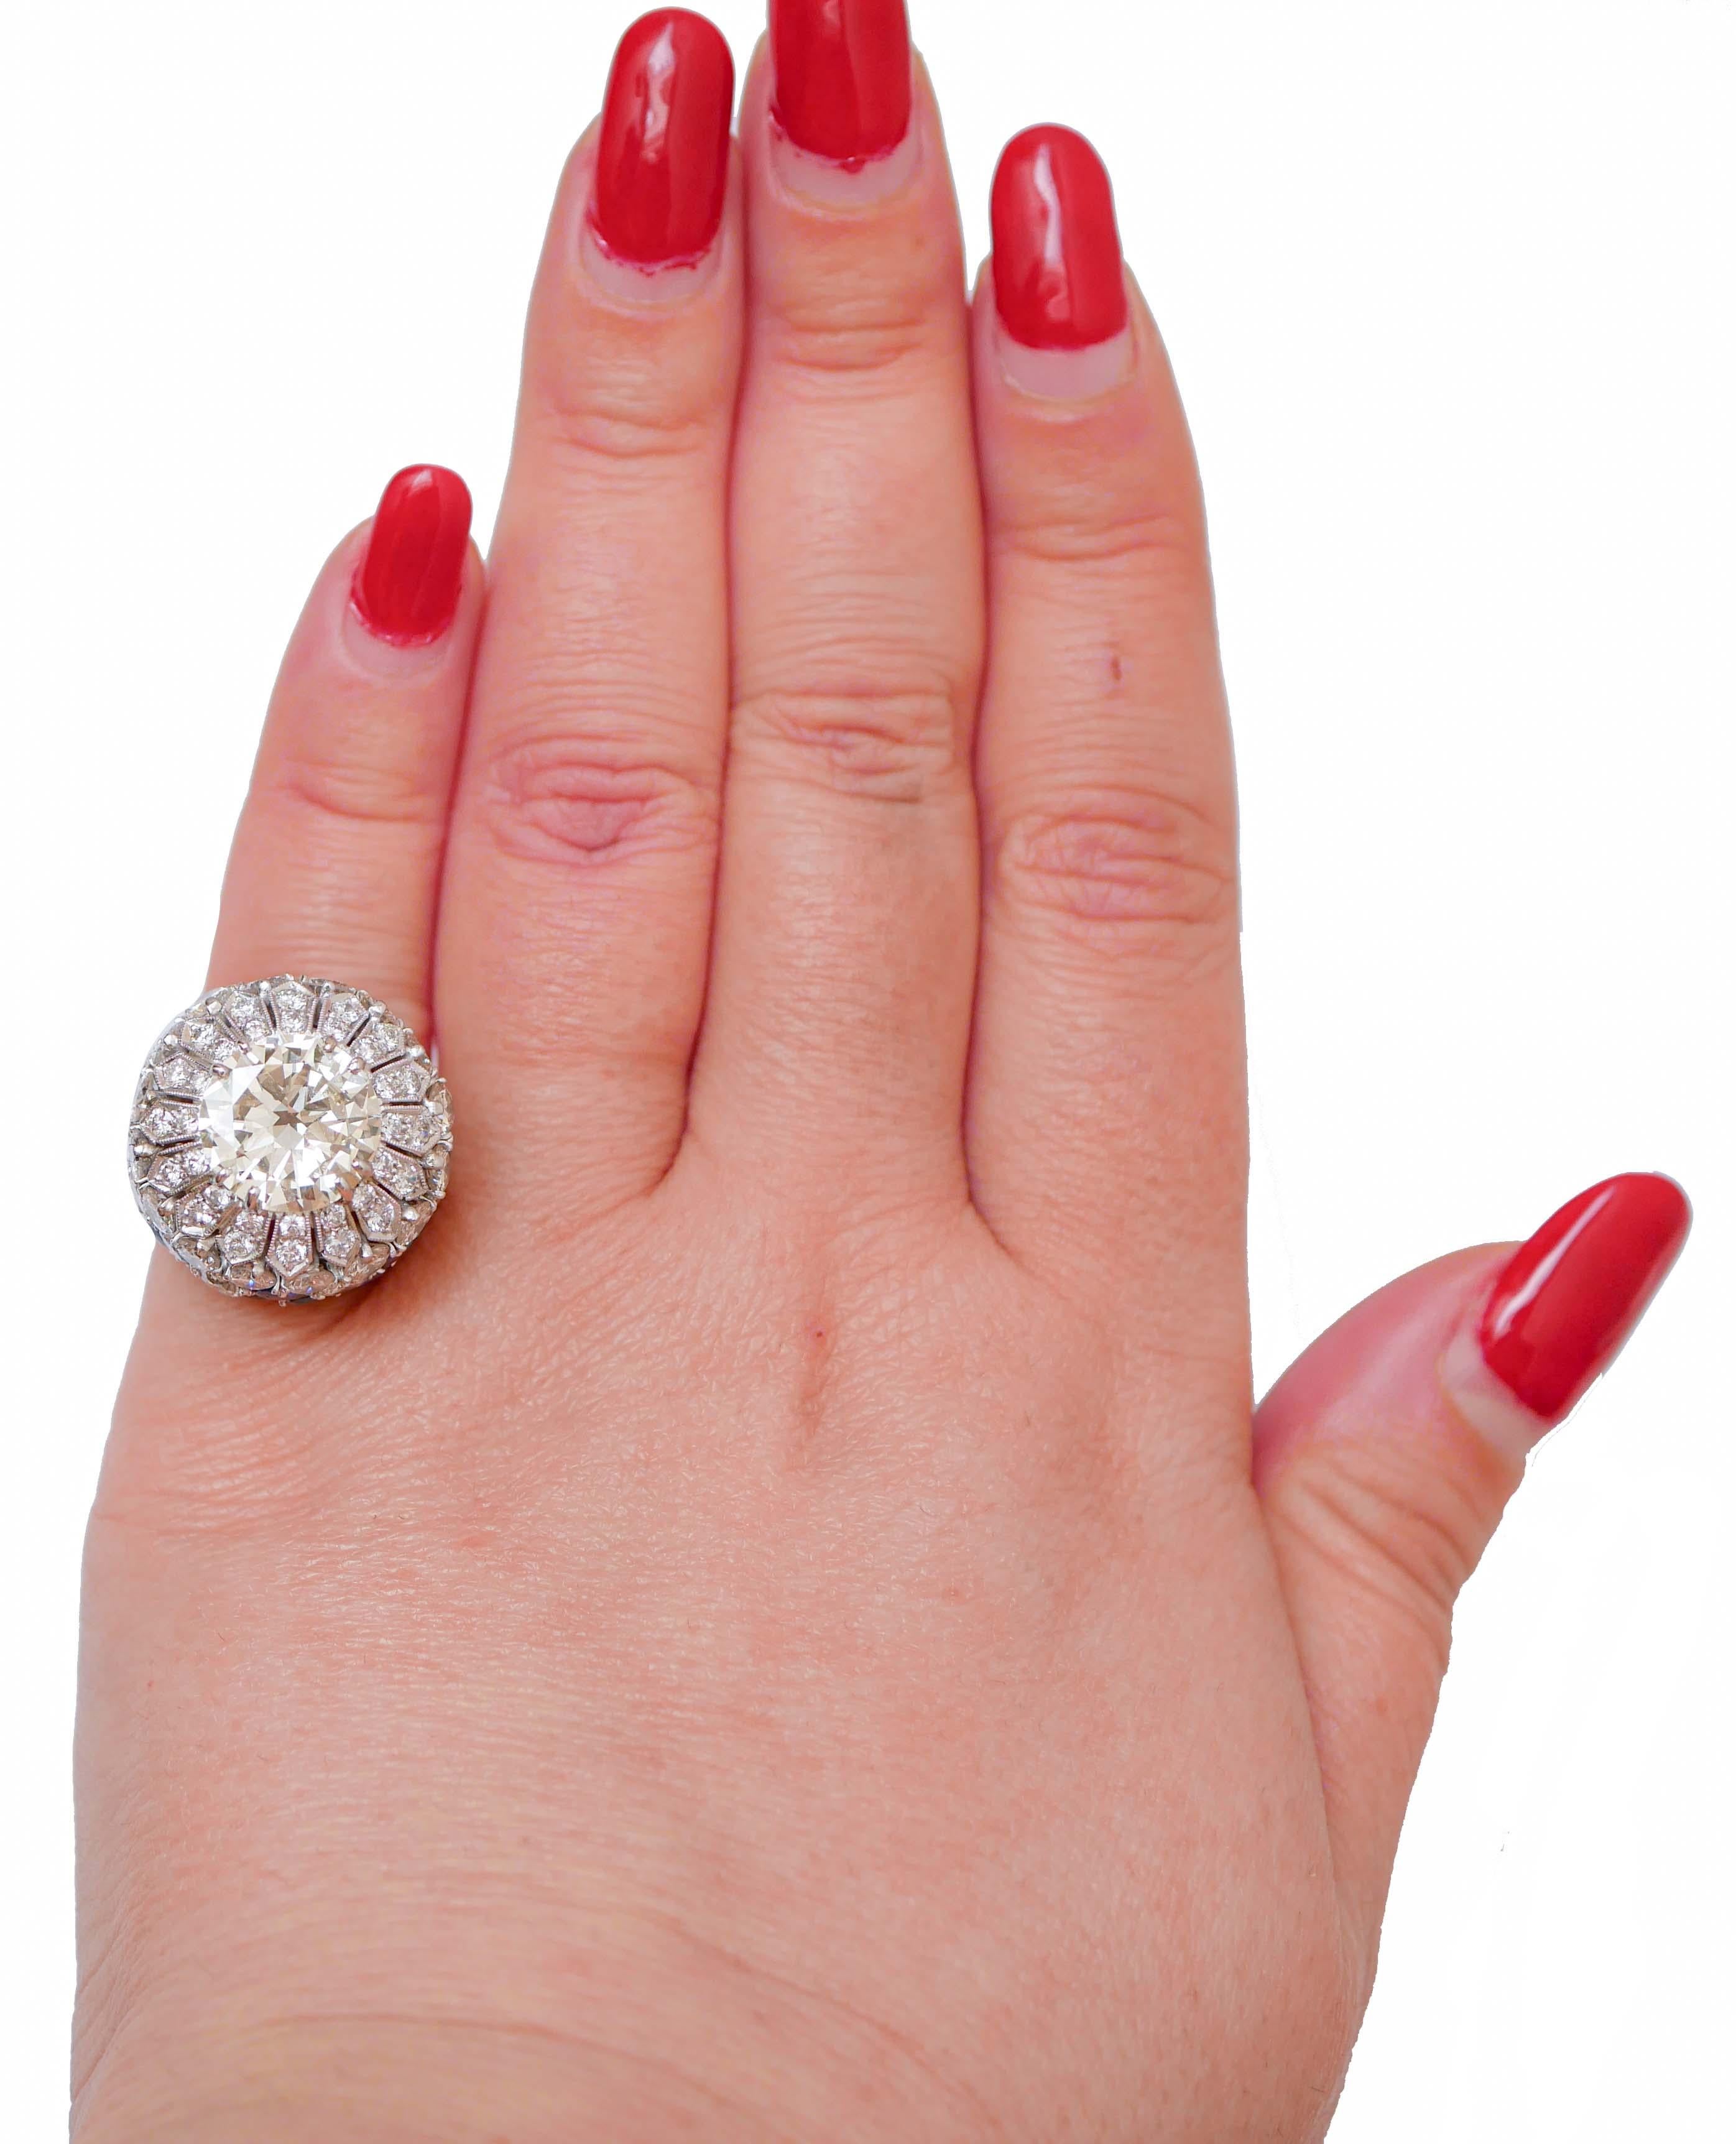 Mixed Cut 3.74 Carats Diamond, Sapphires, Diamonds, 18 Karat White Gold Ring. For Sale